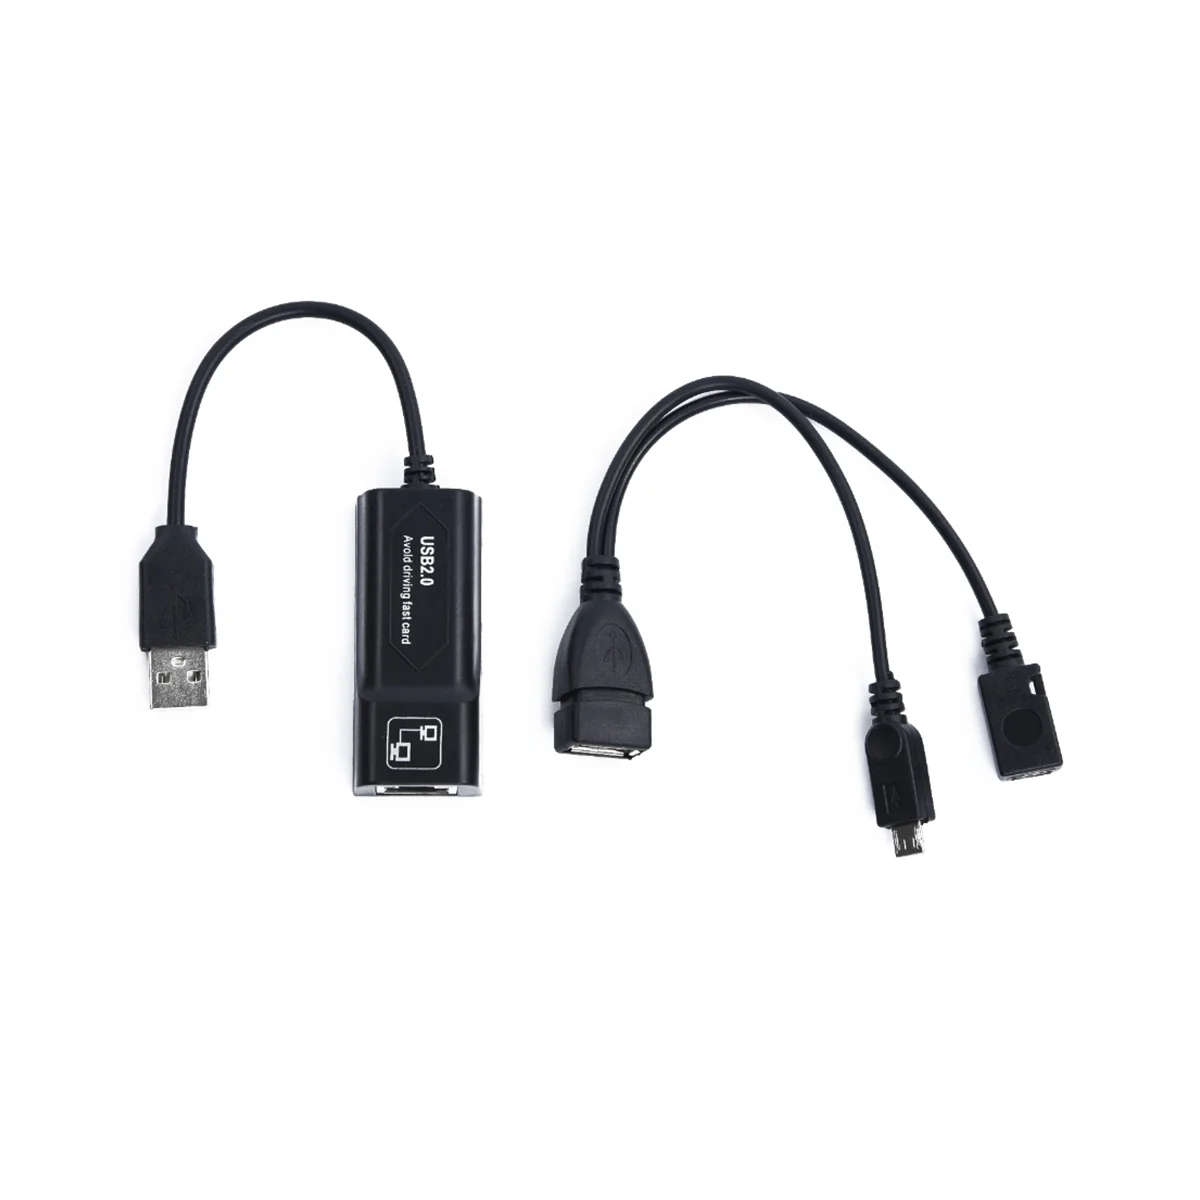 Адаптер USB 2.0 к RJ45 с Адаптерным Кабелем Mirco OTG USB 2.0 LAN Ethernet для Amazon Fire TV 3 или Stick GEN 2